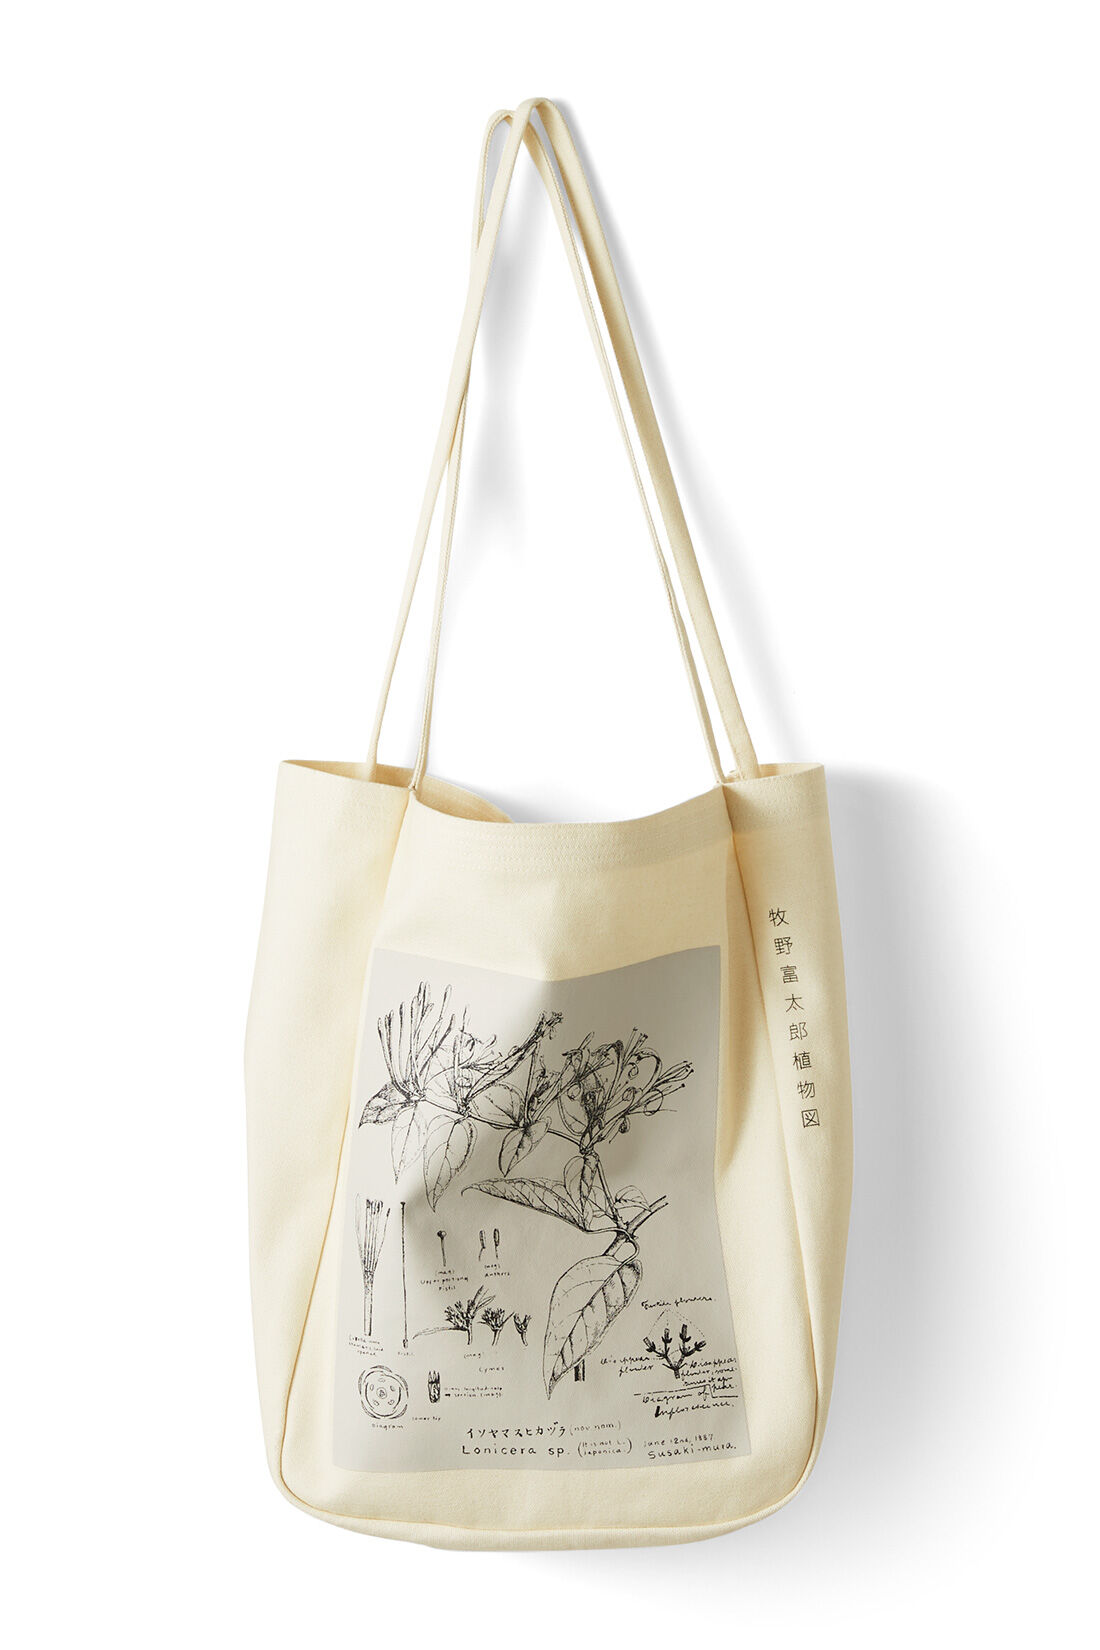 IEDIT|牧野植物園×IEDIT[イディット]コラボ 牧野博士の描いたキダチニンドウのトートバッグ〈ブラウン〉|〈エクリュホワイト〉